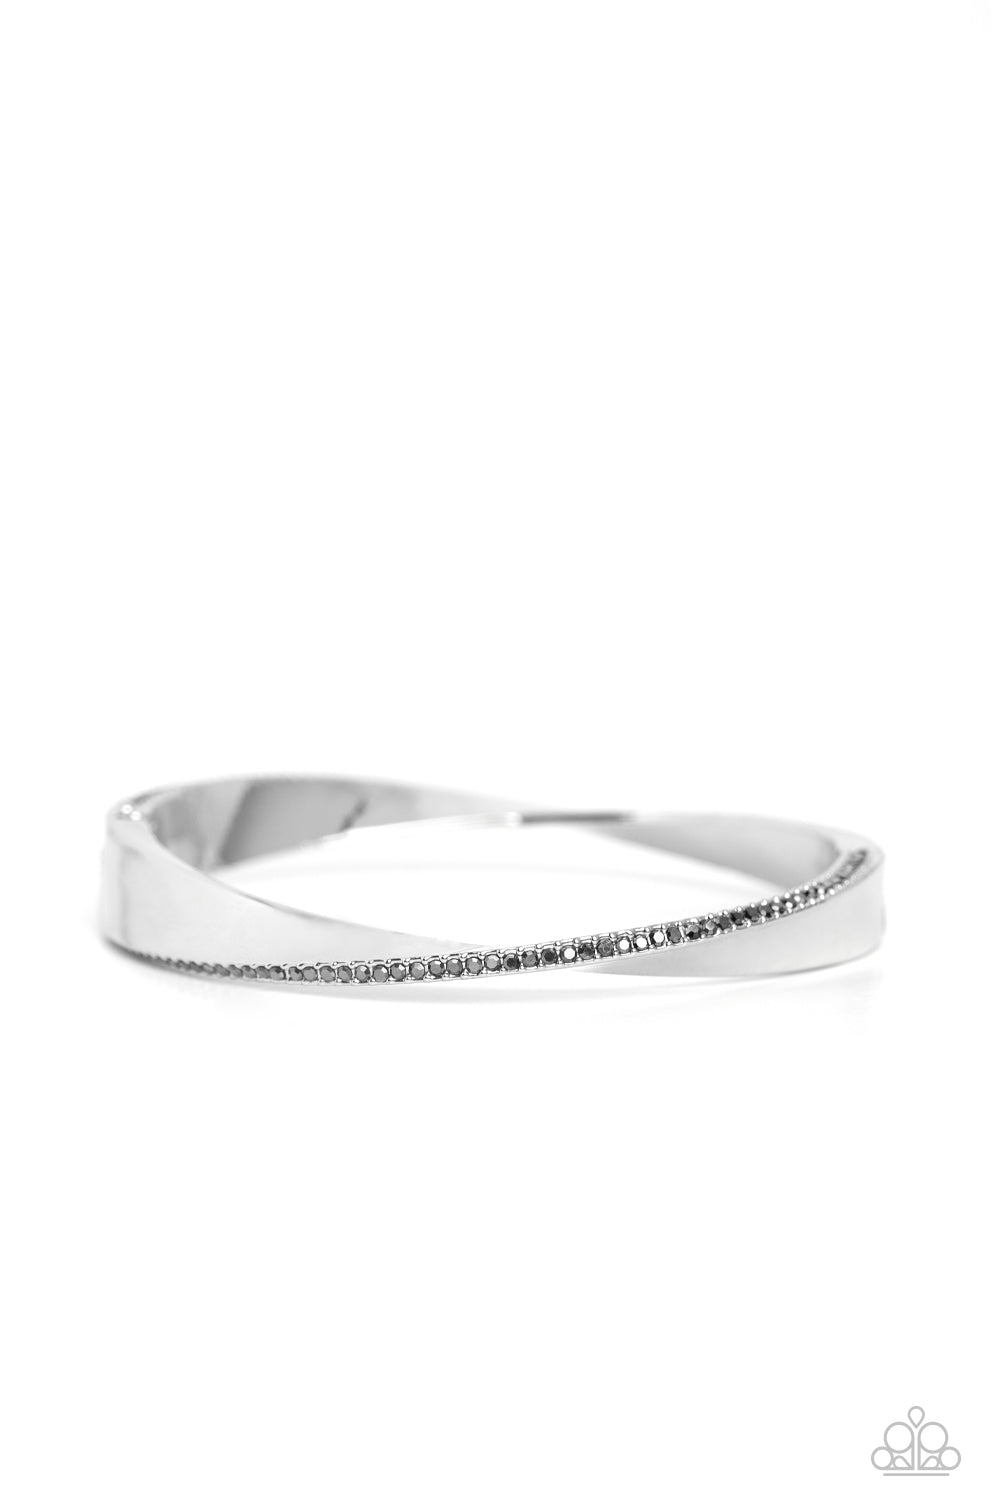 Paparazzi “Artistically Adorned” Silver Hinge Bracelet